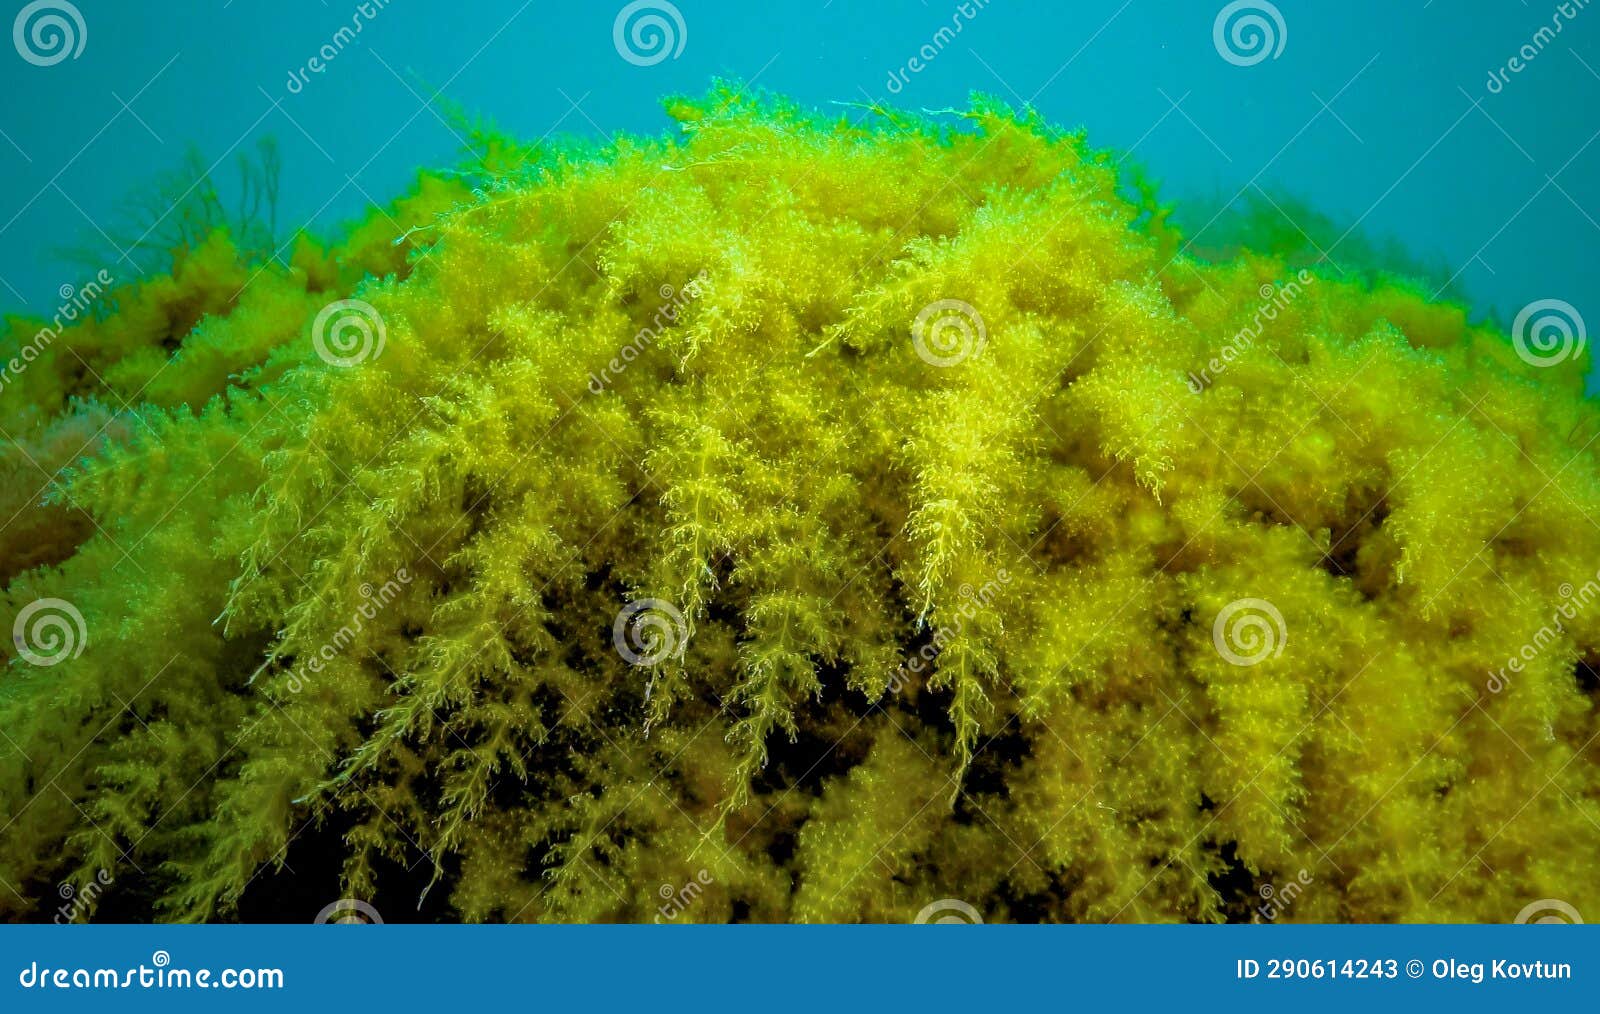 black sea, hydroids obelia, (coelenterates), macrophytes red and green algae